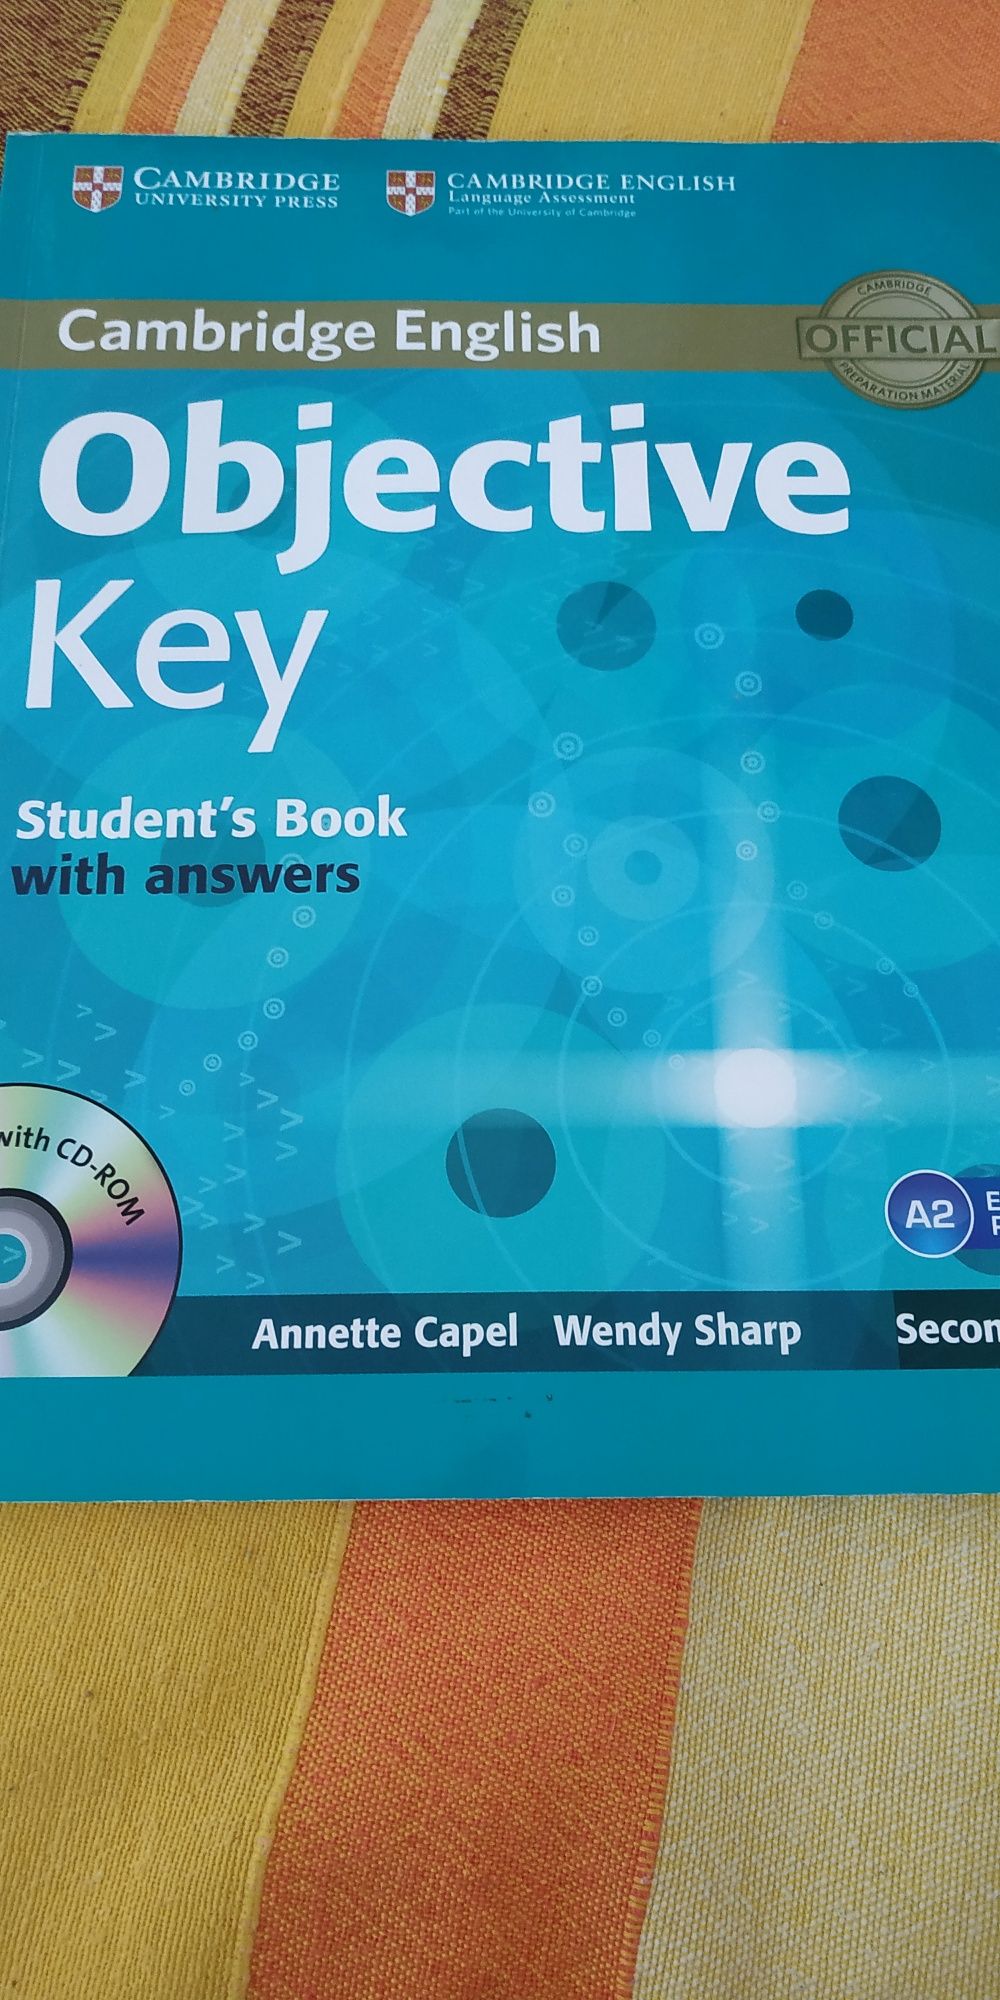 Vendo objective key,students book, Cambridge novo c cd